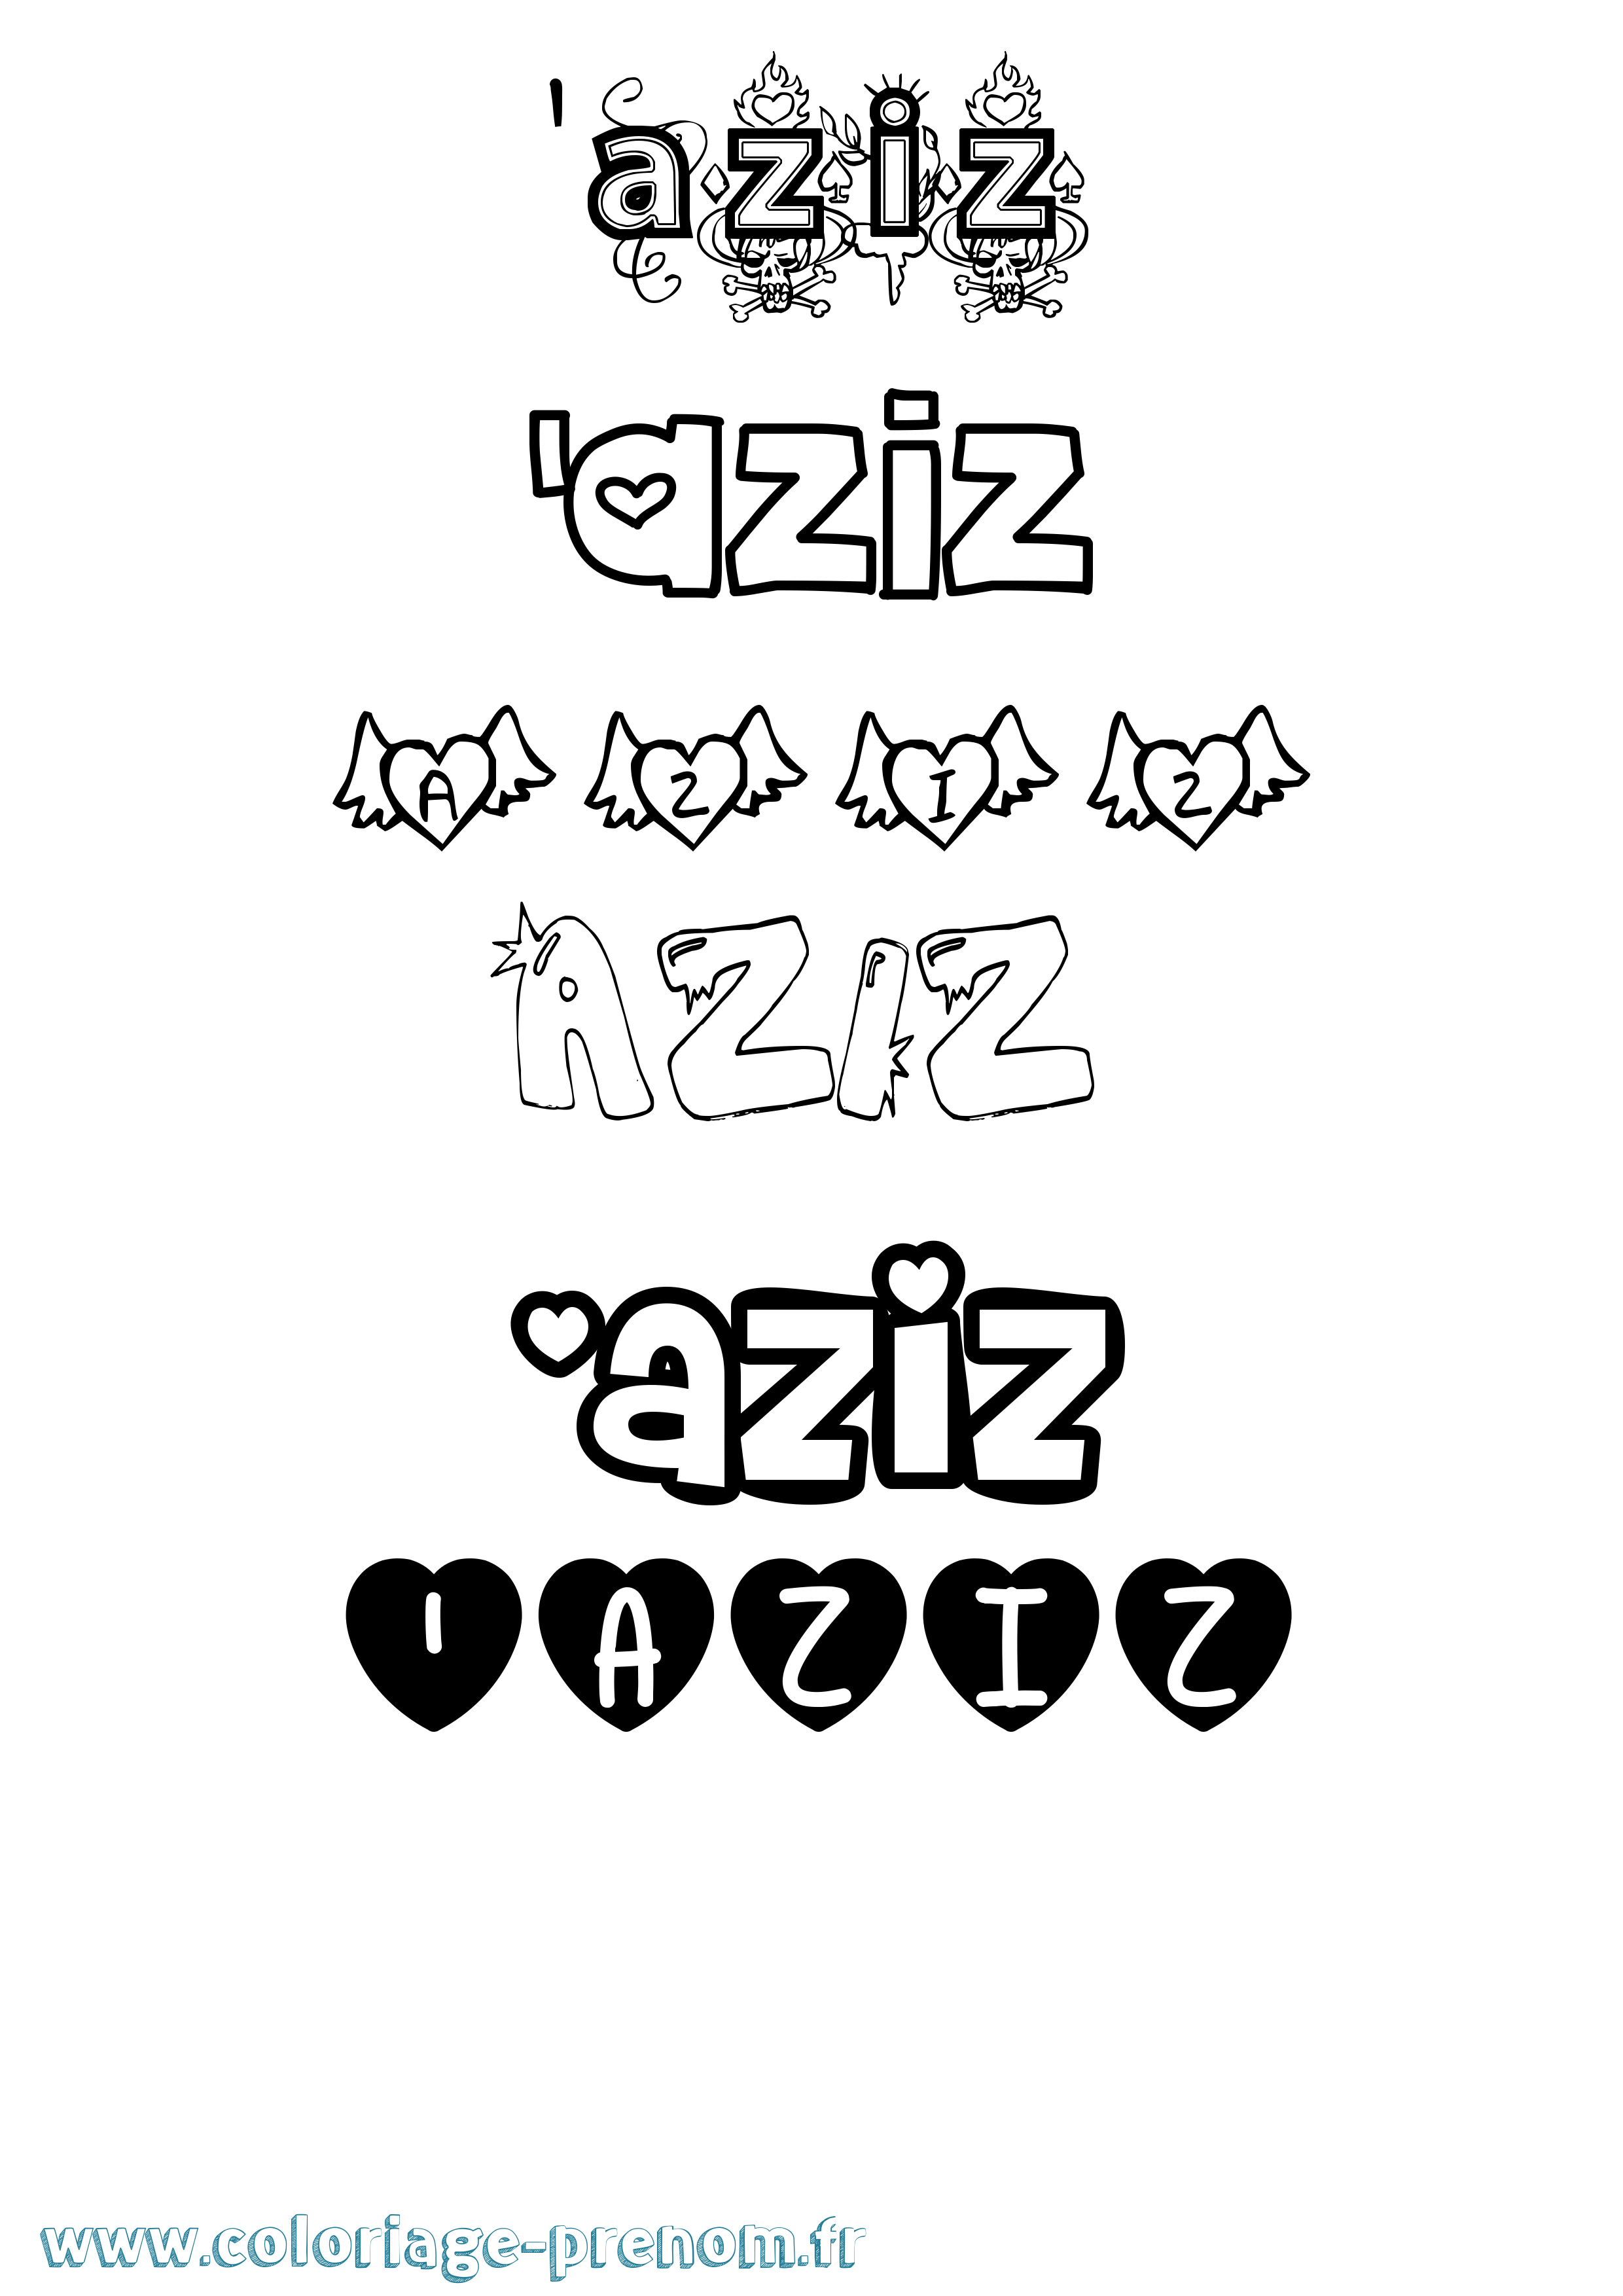 Coloriage prénom 'Aziz Girly